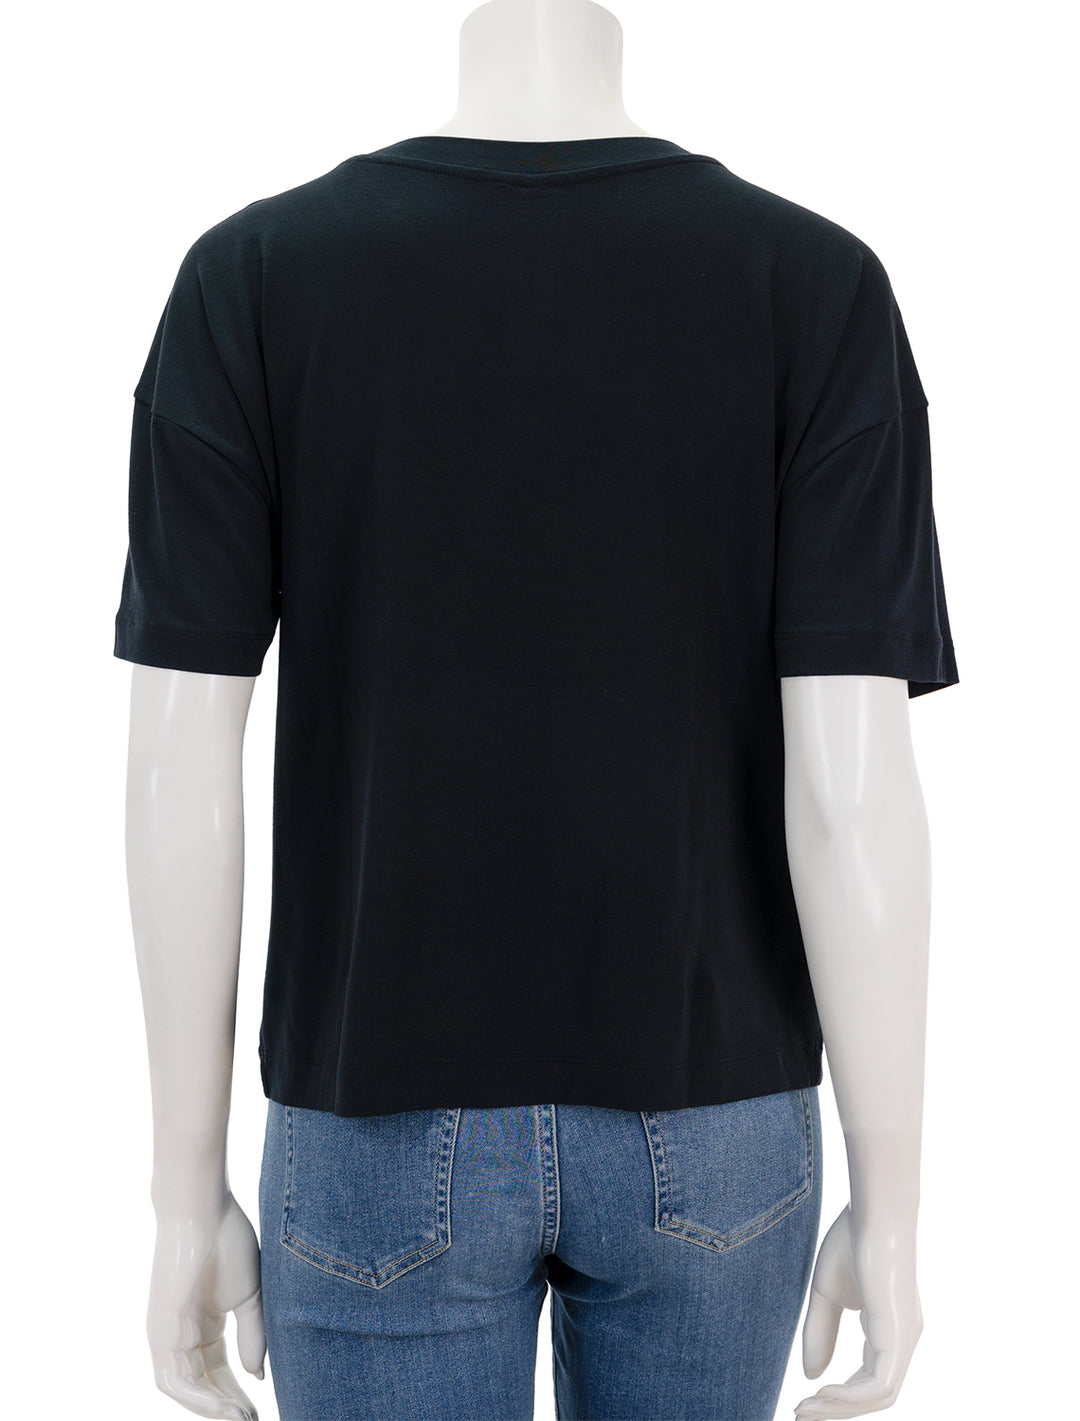 Back view of Eberjey's gisele everyday tshirt in black.